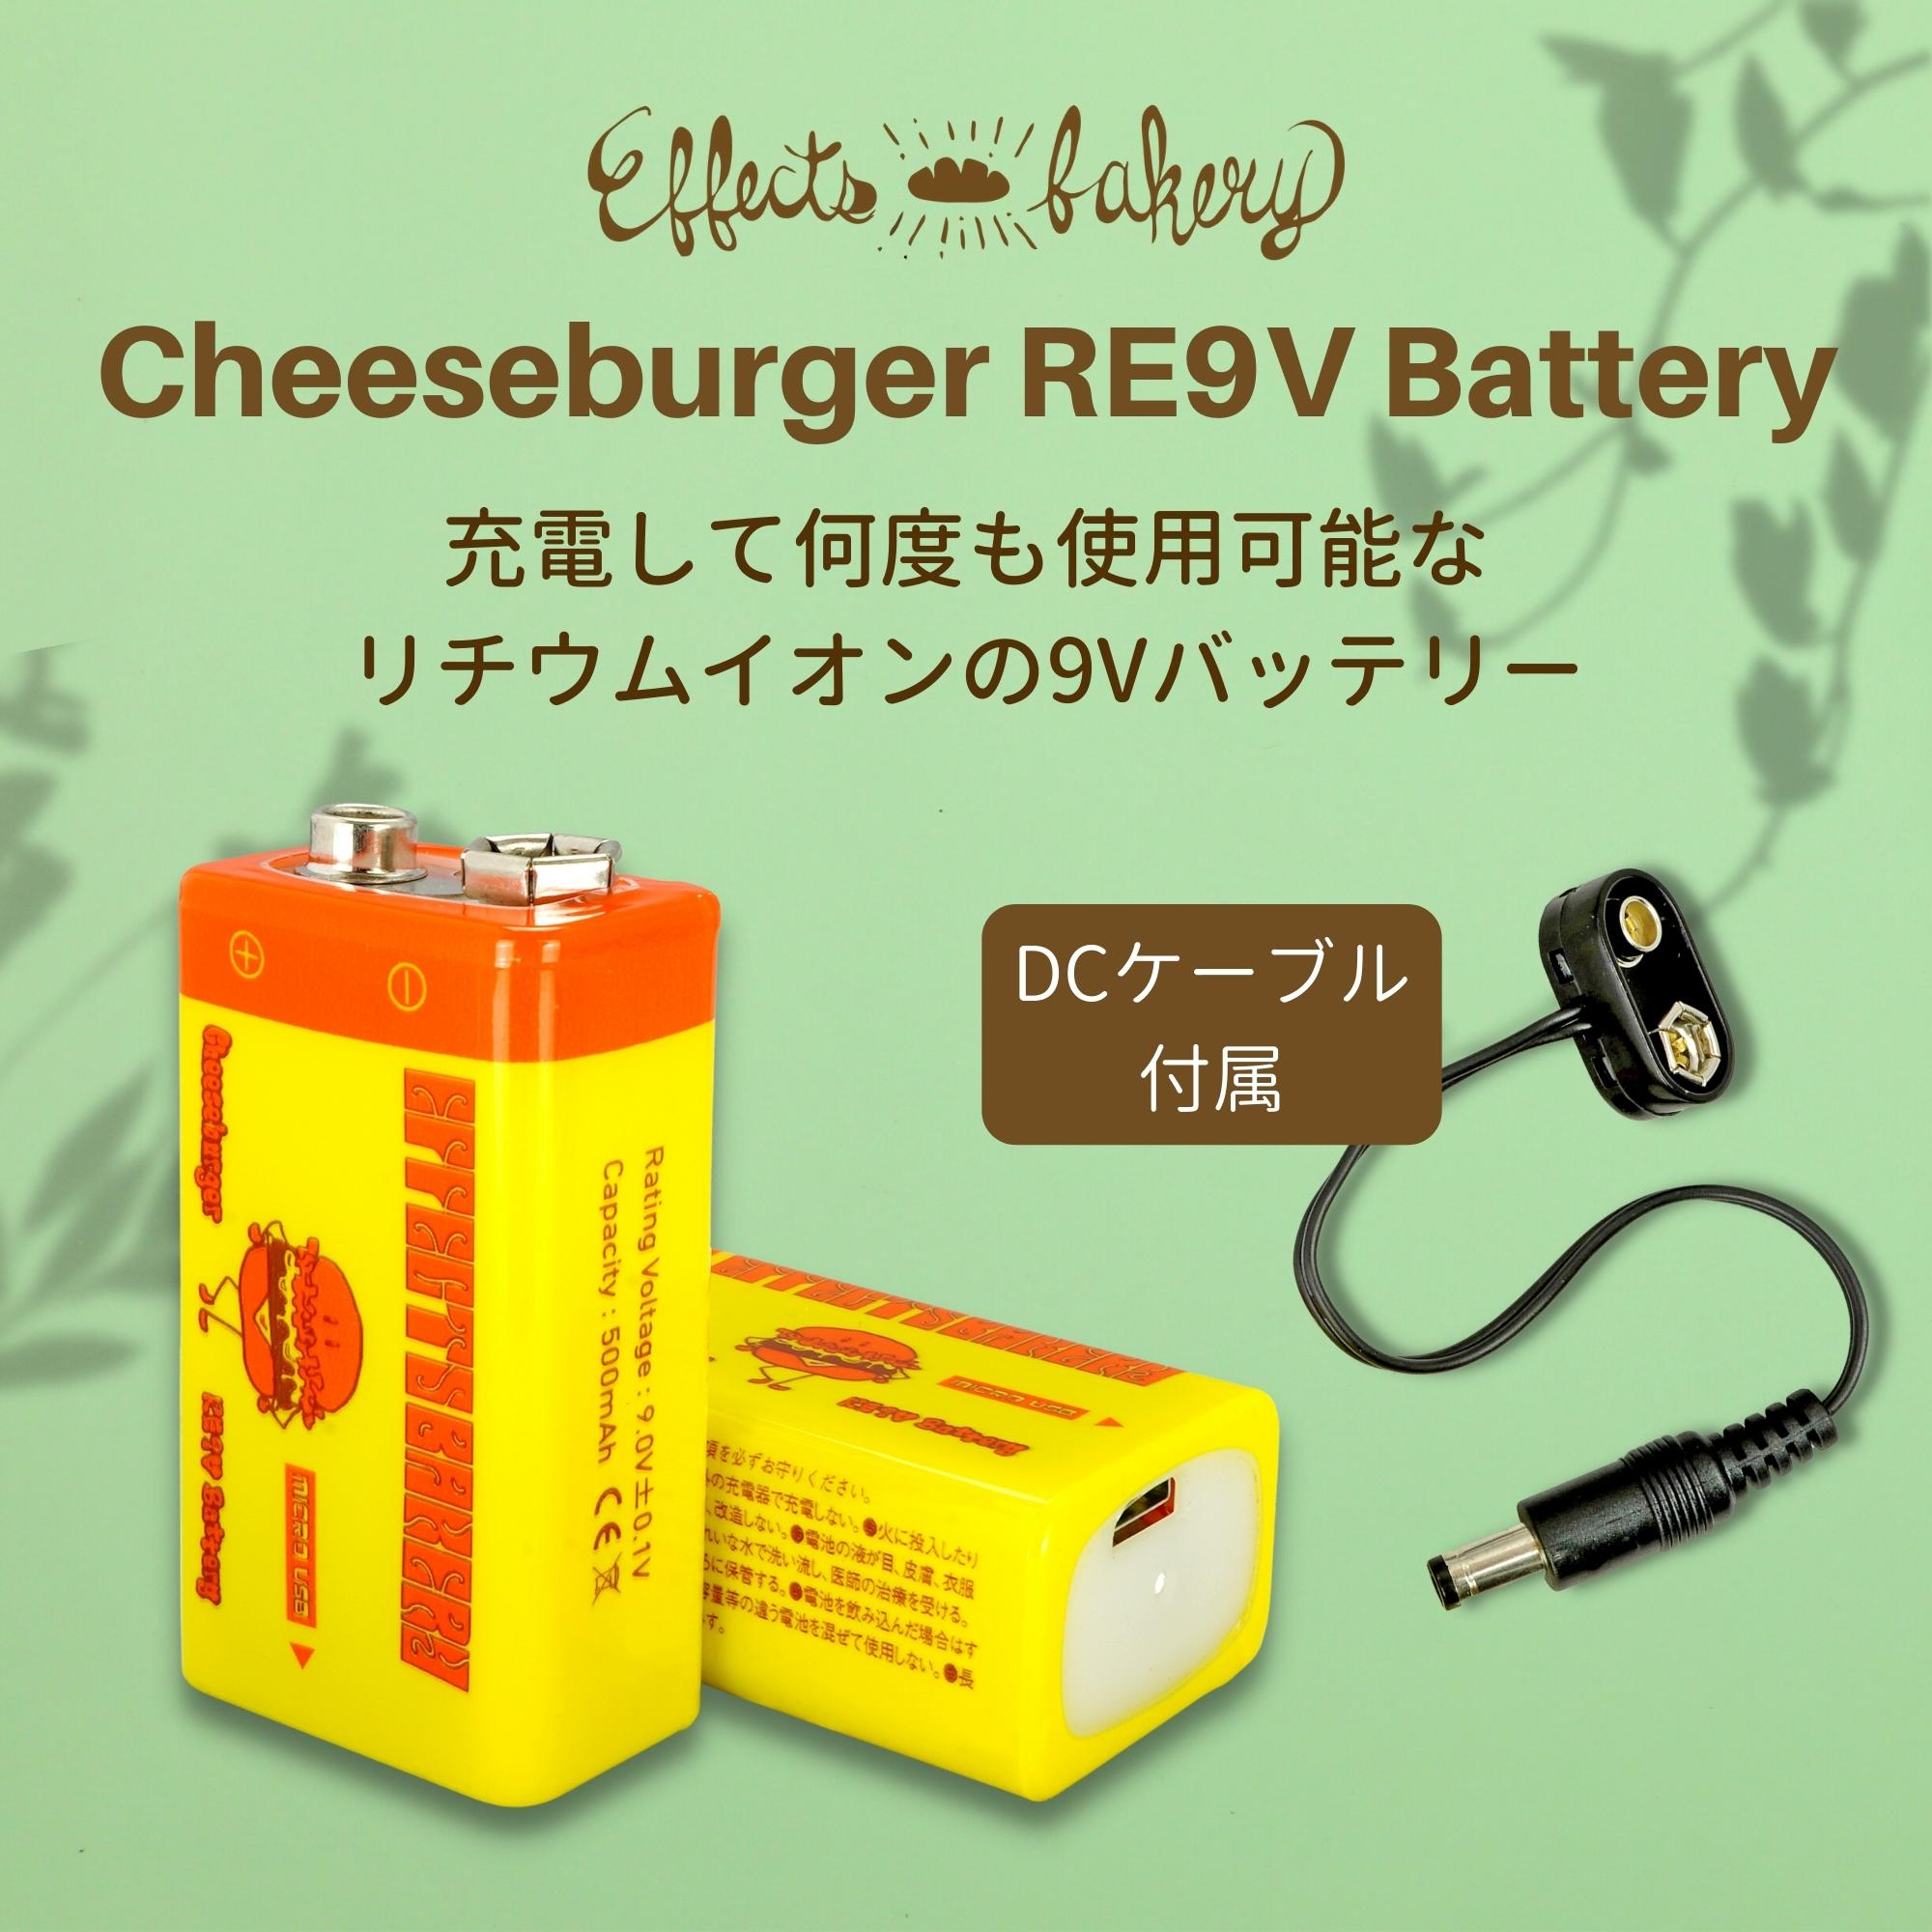 Effects Bakery / Cheeseburger RE9V Battery – LEP INTERNATIONAL